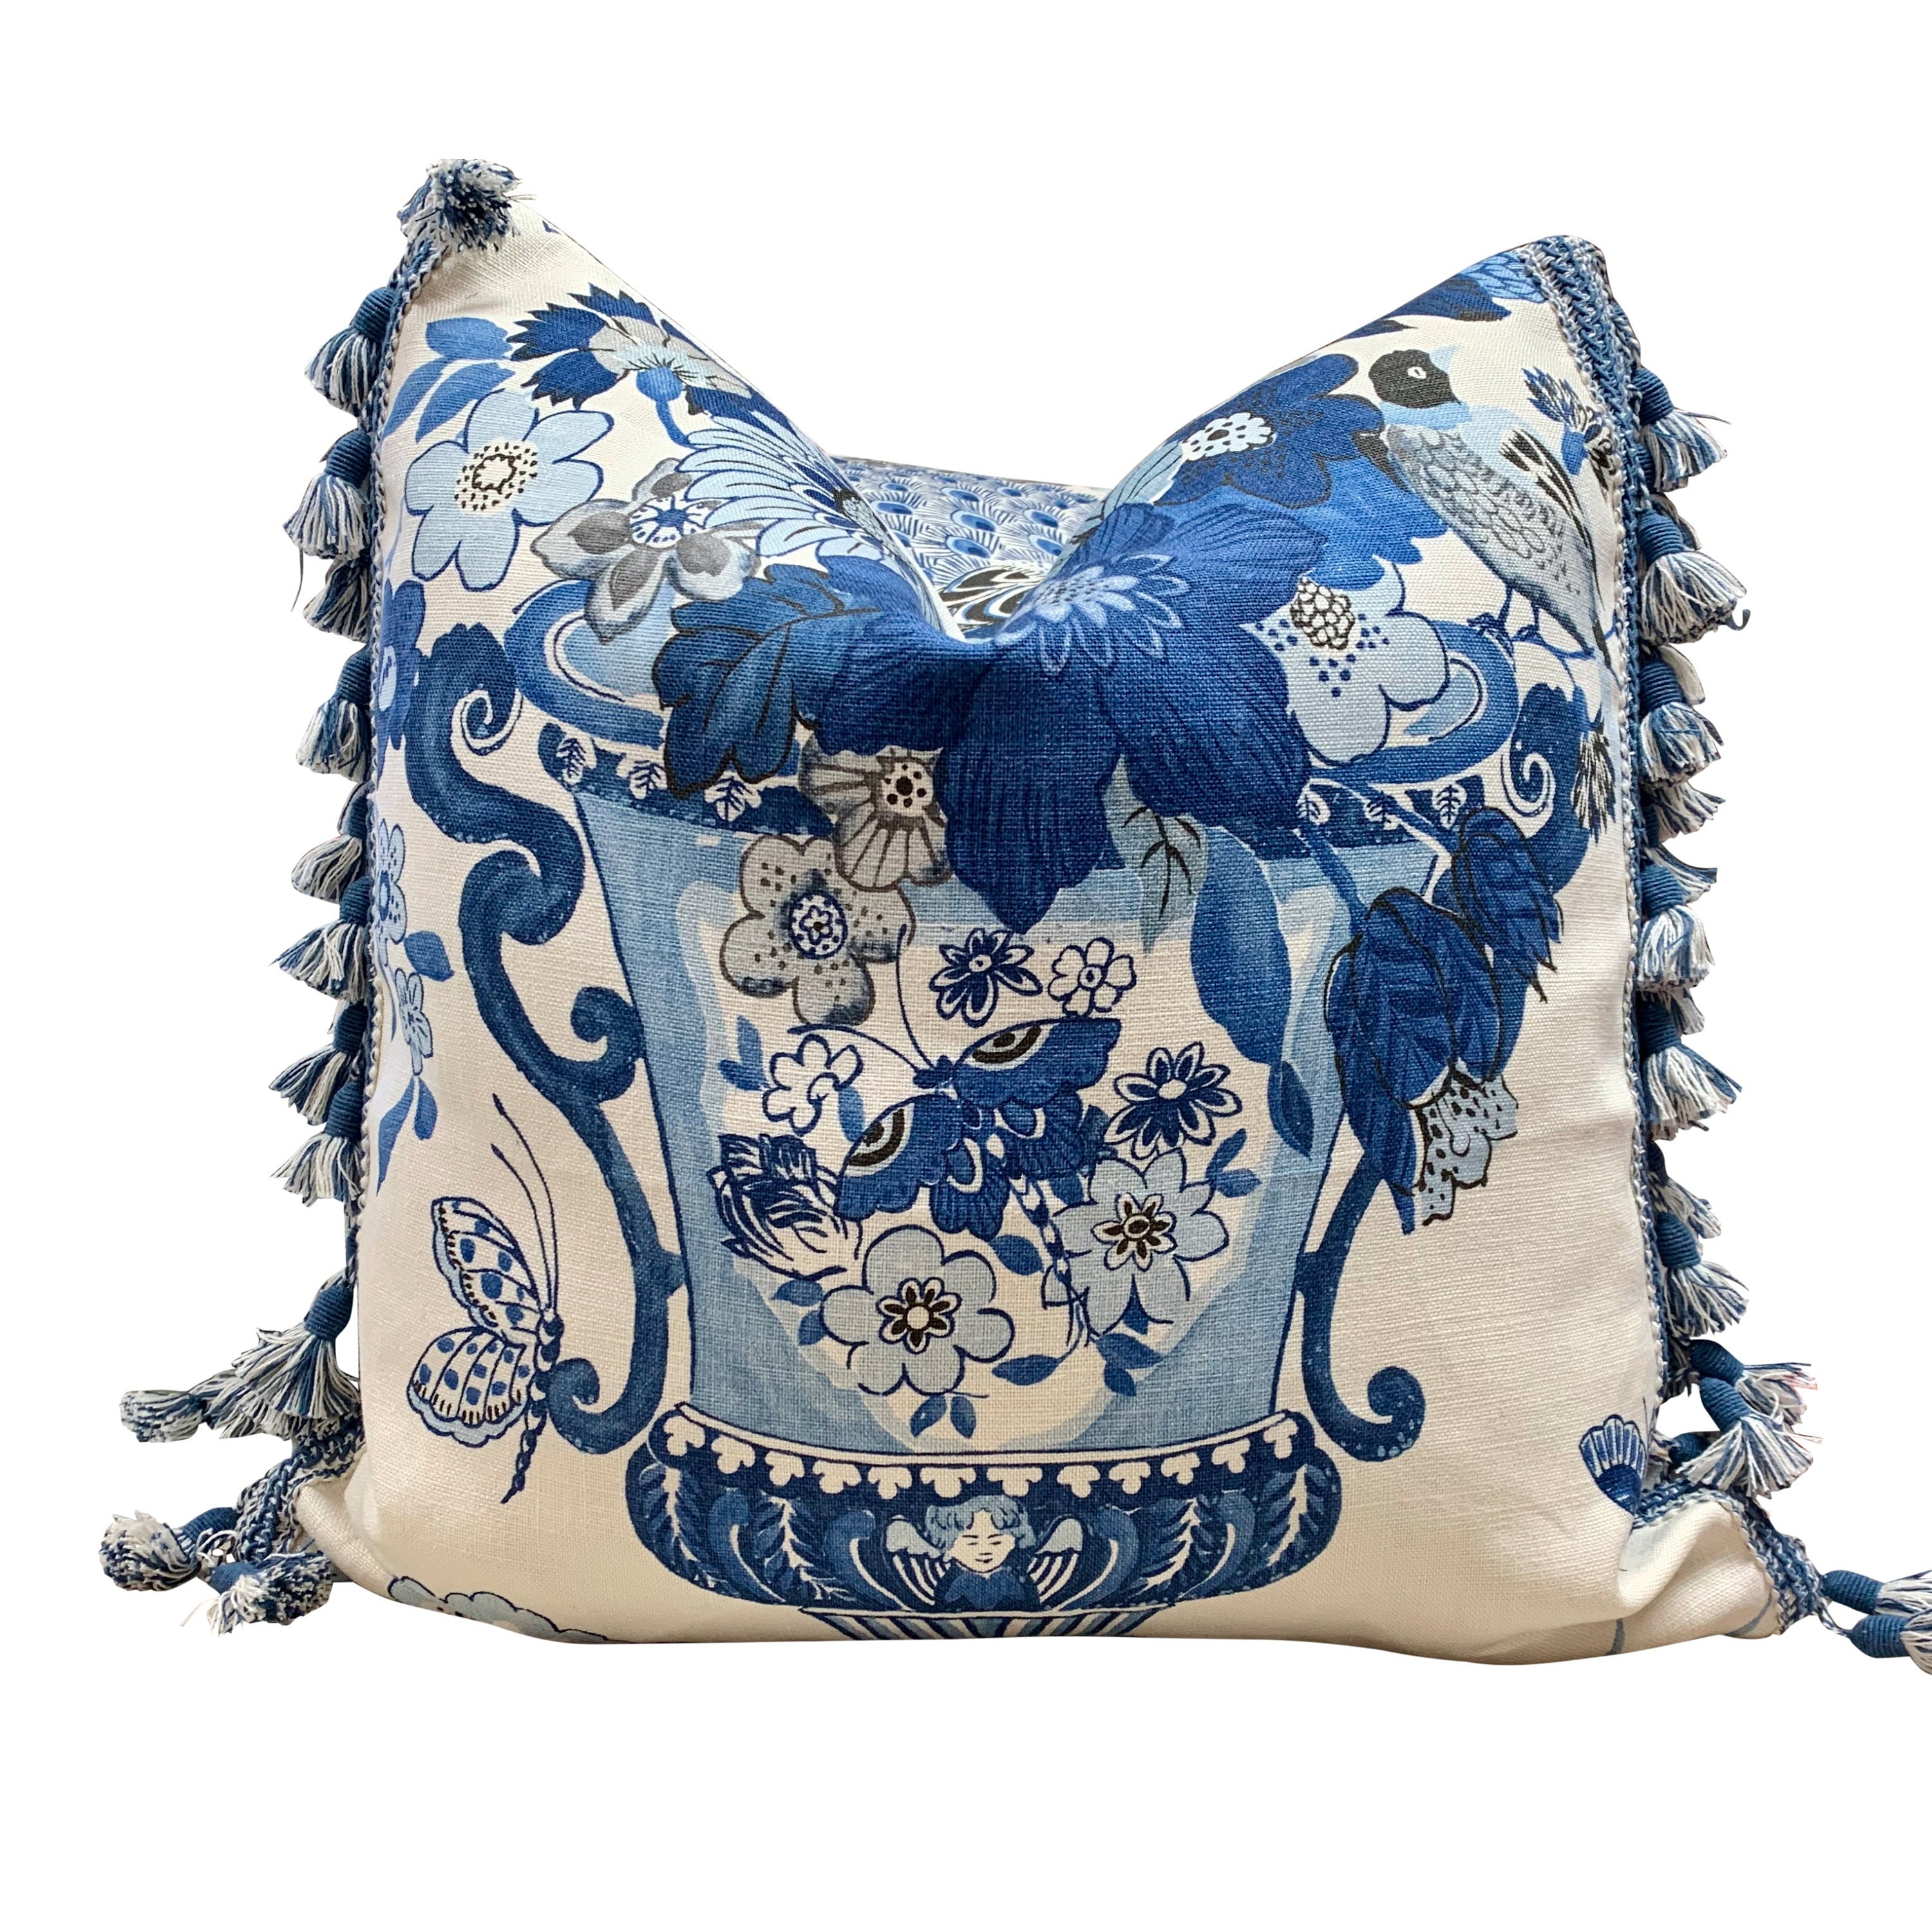 Schumacher Lansdale Bouquet Pillow Blue. Lumbar Decorative Pillow in Porcelain Blue and White, Designer high end floral pillow cover case